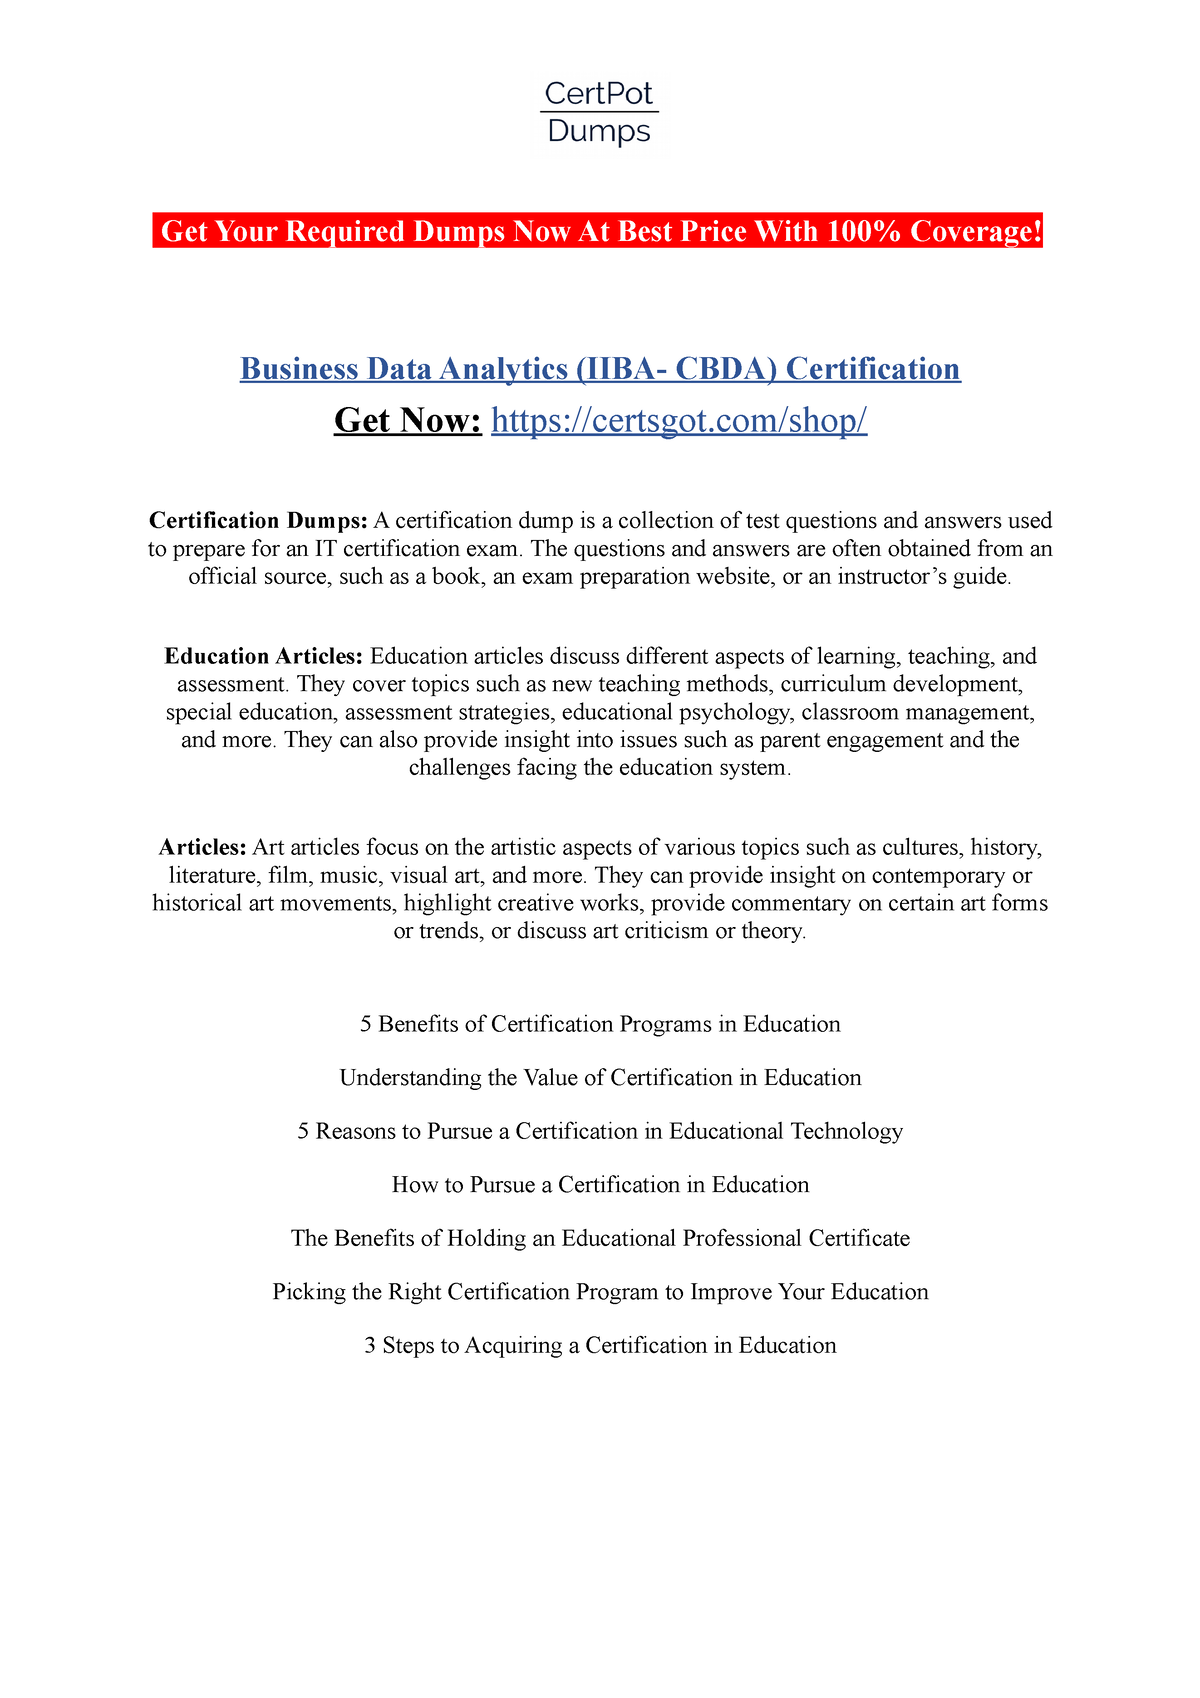 Business Data Analytics (IIBA CBDA) Certification Get Your Required